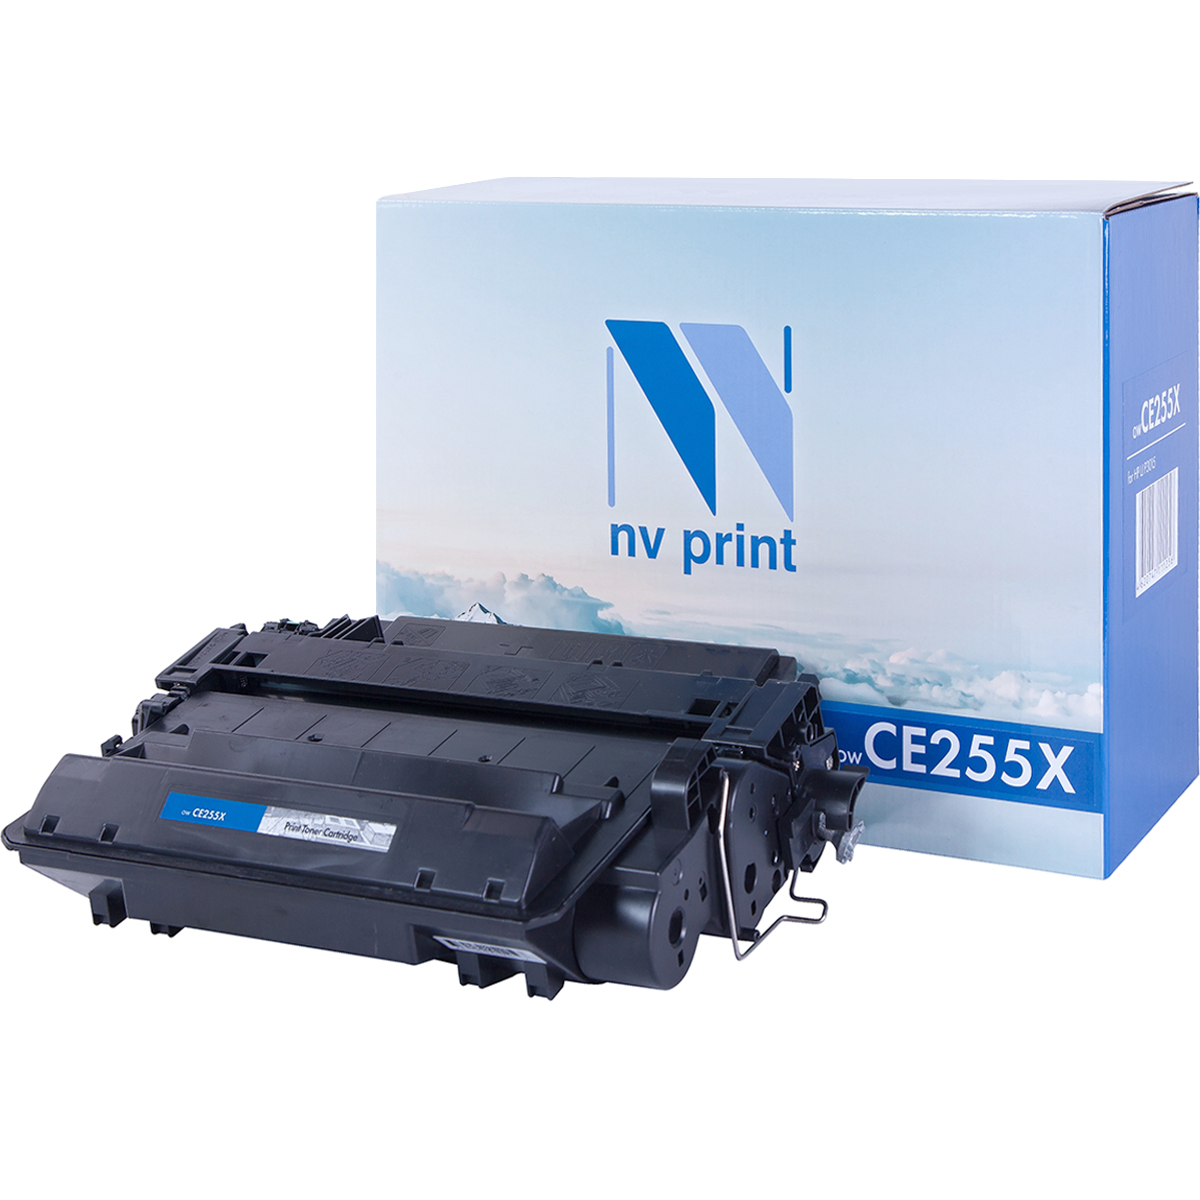 Картридж NV Print CE255X для Нewlett-Packard LJ P3015 (12500k) картридж easyprint ce255x ce255x ce255x ce255x ce255x для для hp laserjet enterprise p3015 canon lbp6750dn 12500стр черный